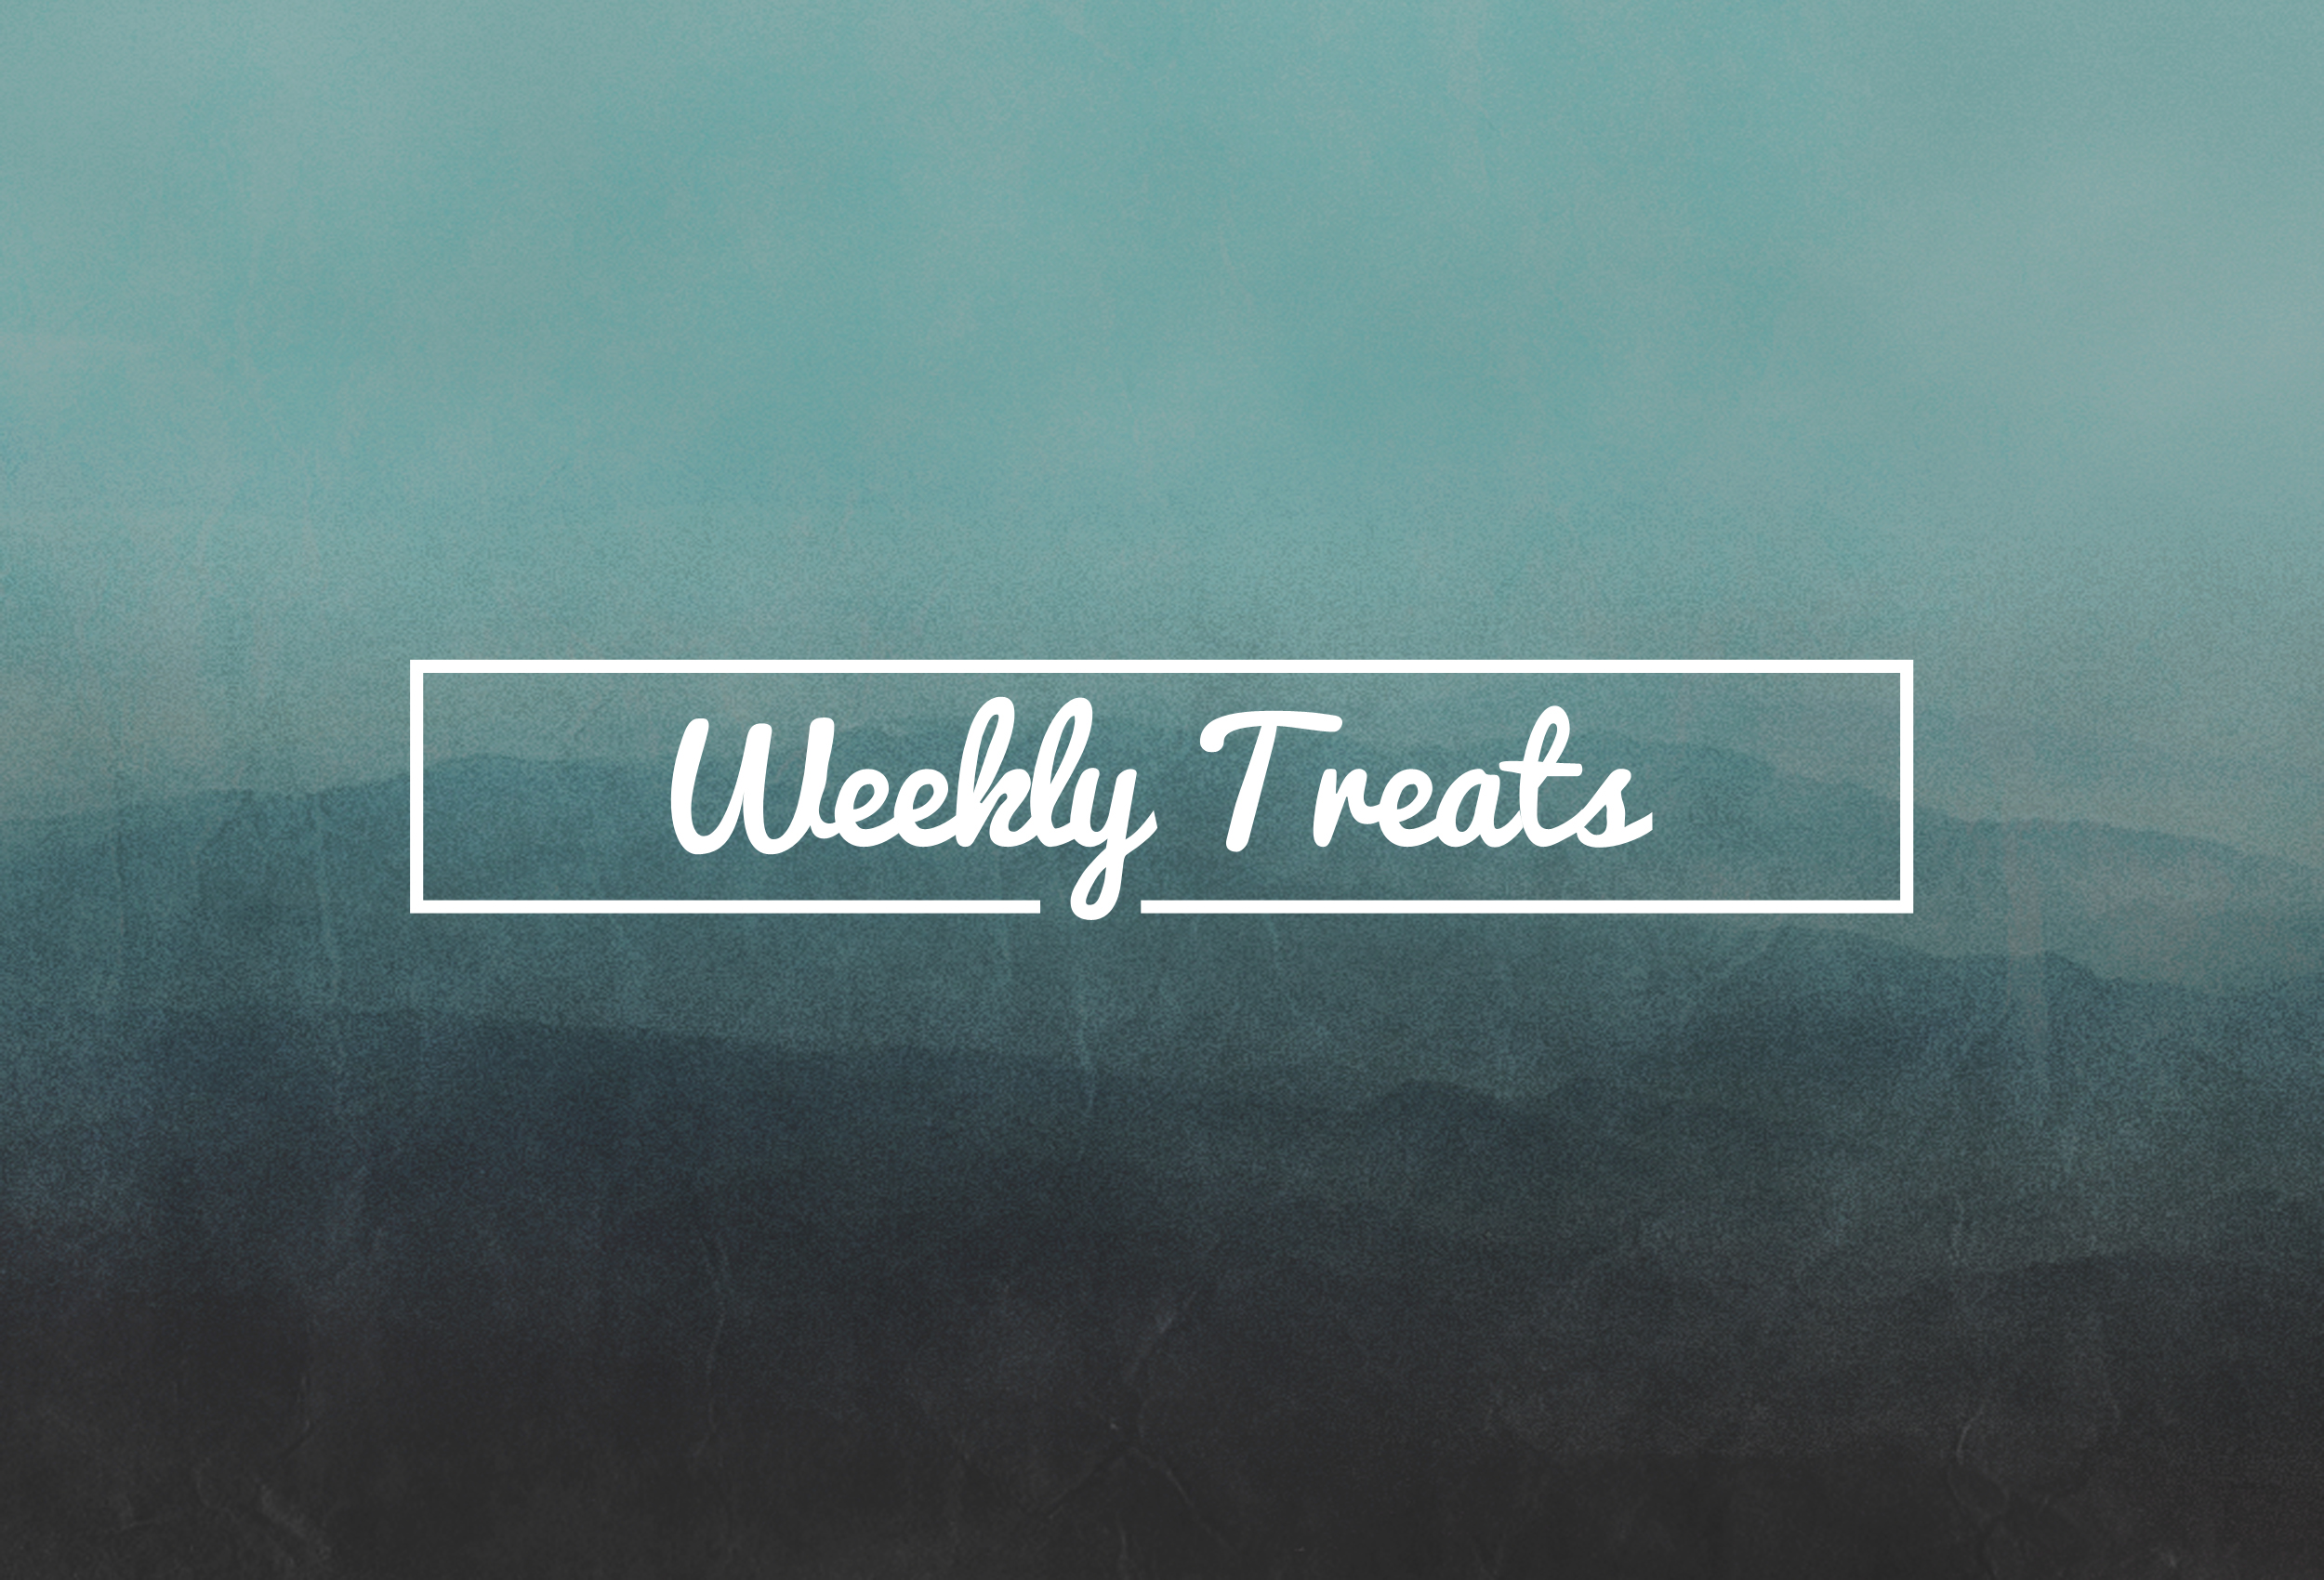 Weekly Treats 2015 logo and branding design.